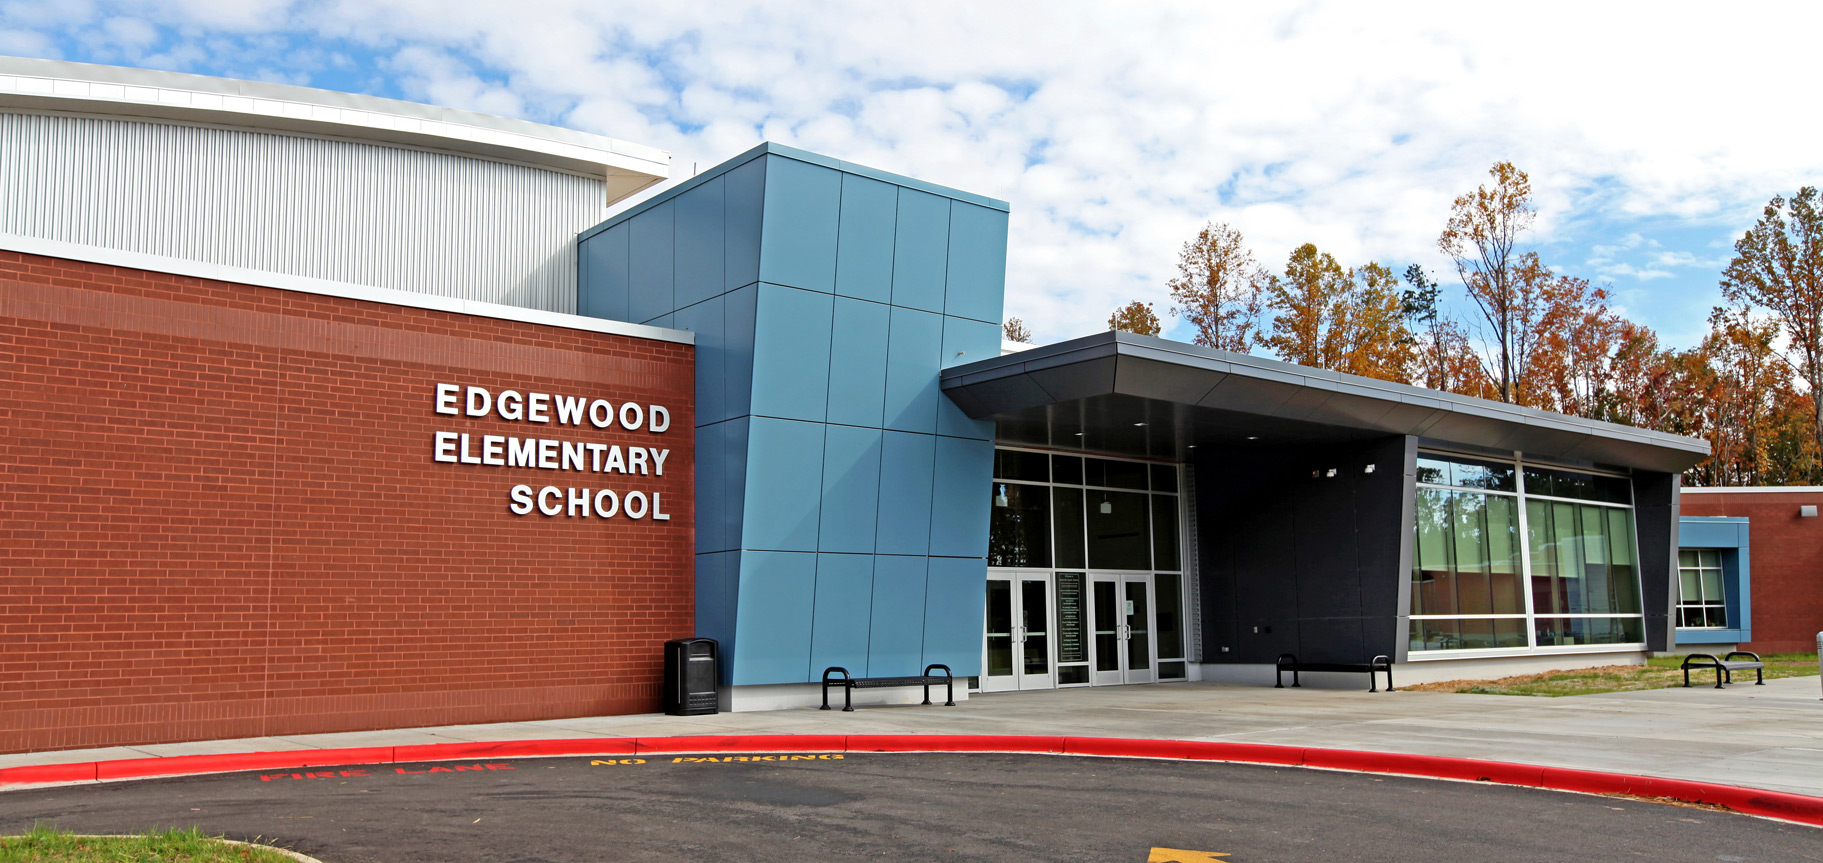 Edgewood Elementary School